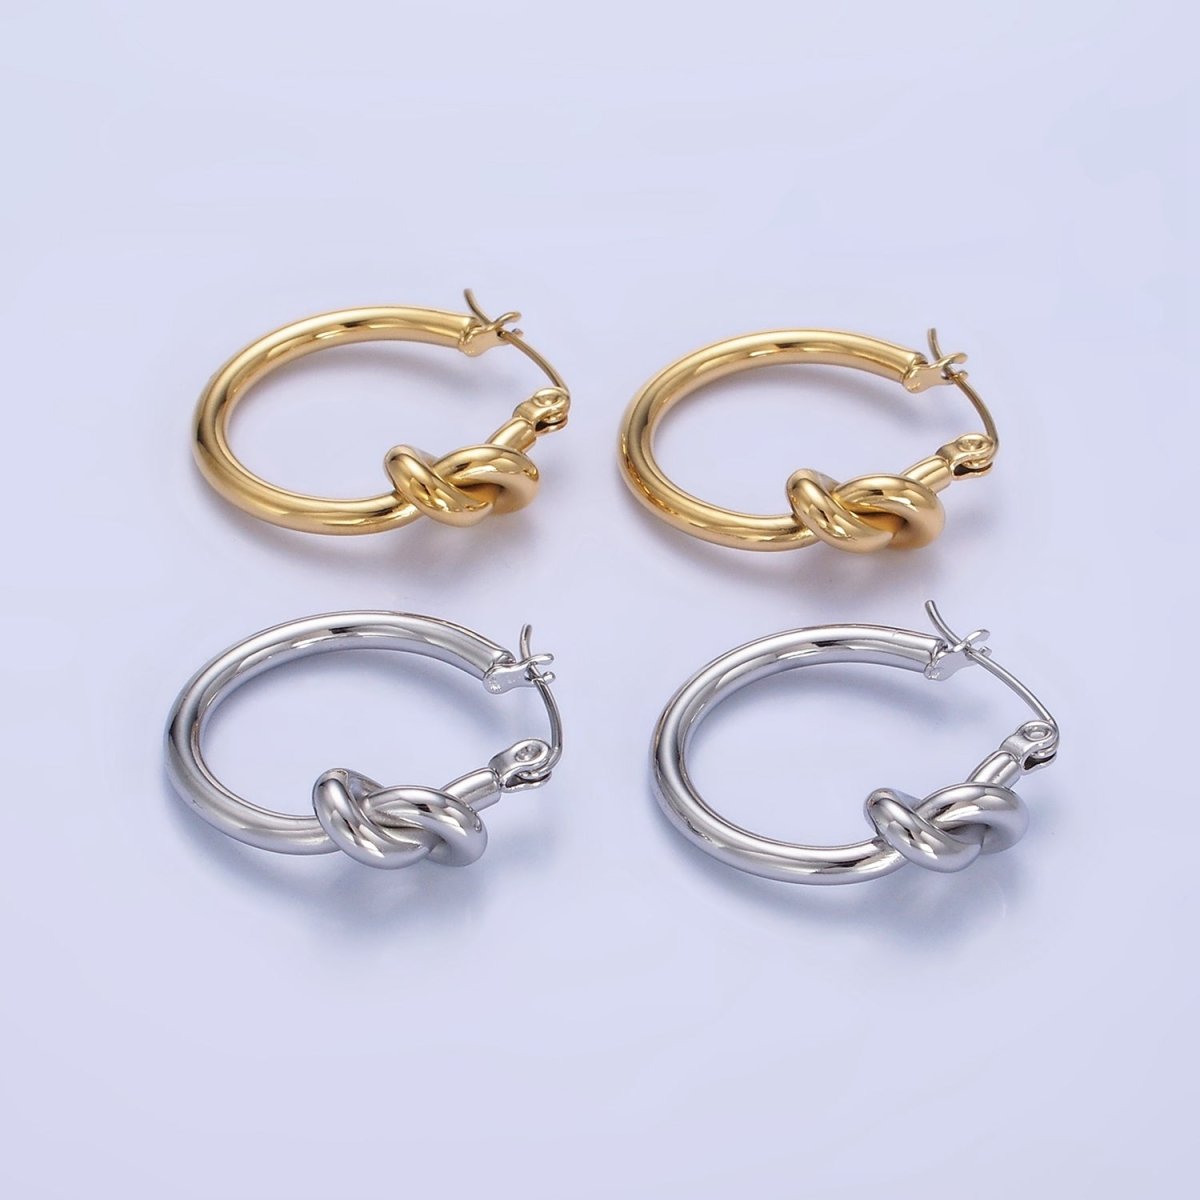 Stainless Steel 25mm Knot Latch Hoop Earrings in Gold & Silver | P448 P449 - DLUXCA